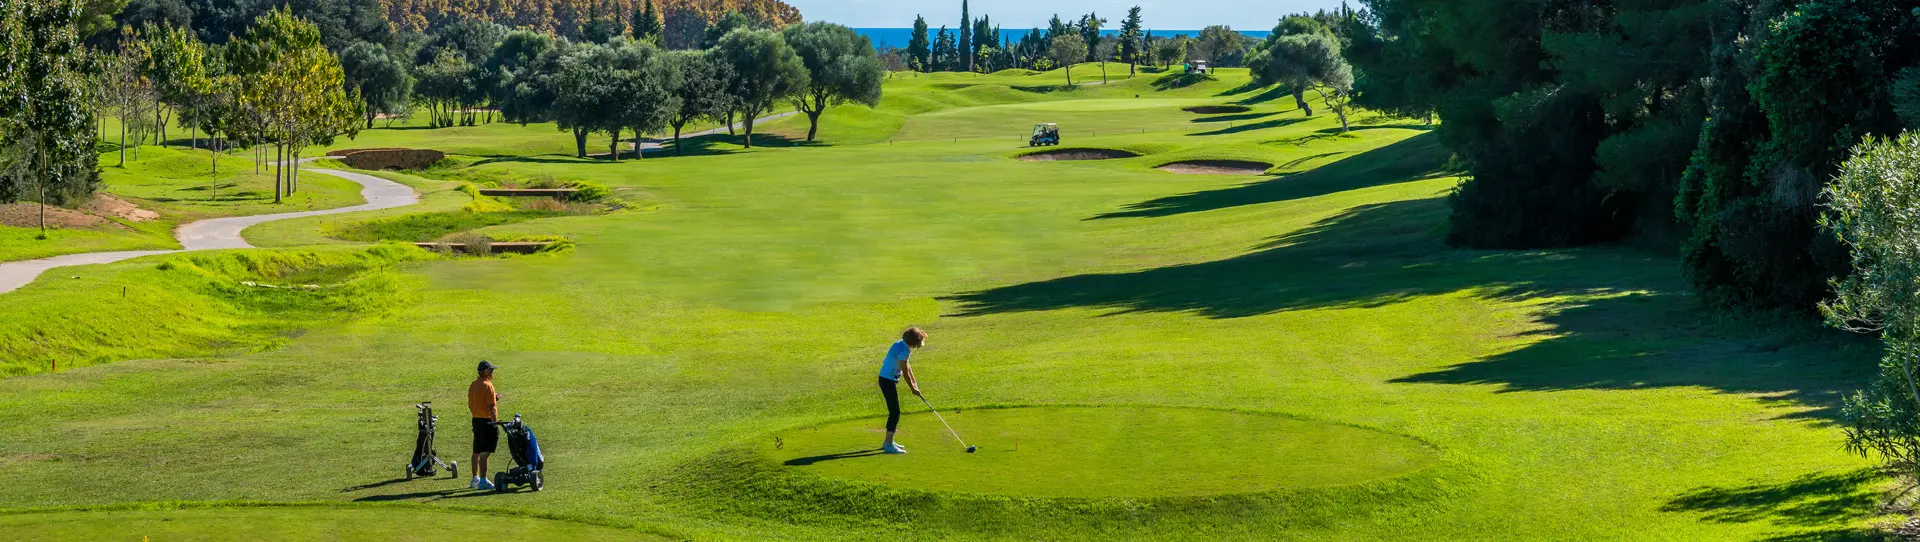 Spain golf courses - Pula Golf Course - Photo 1